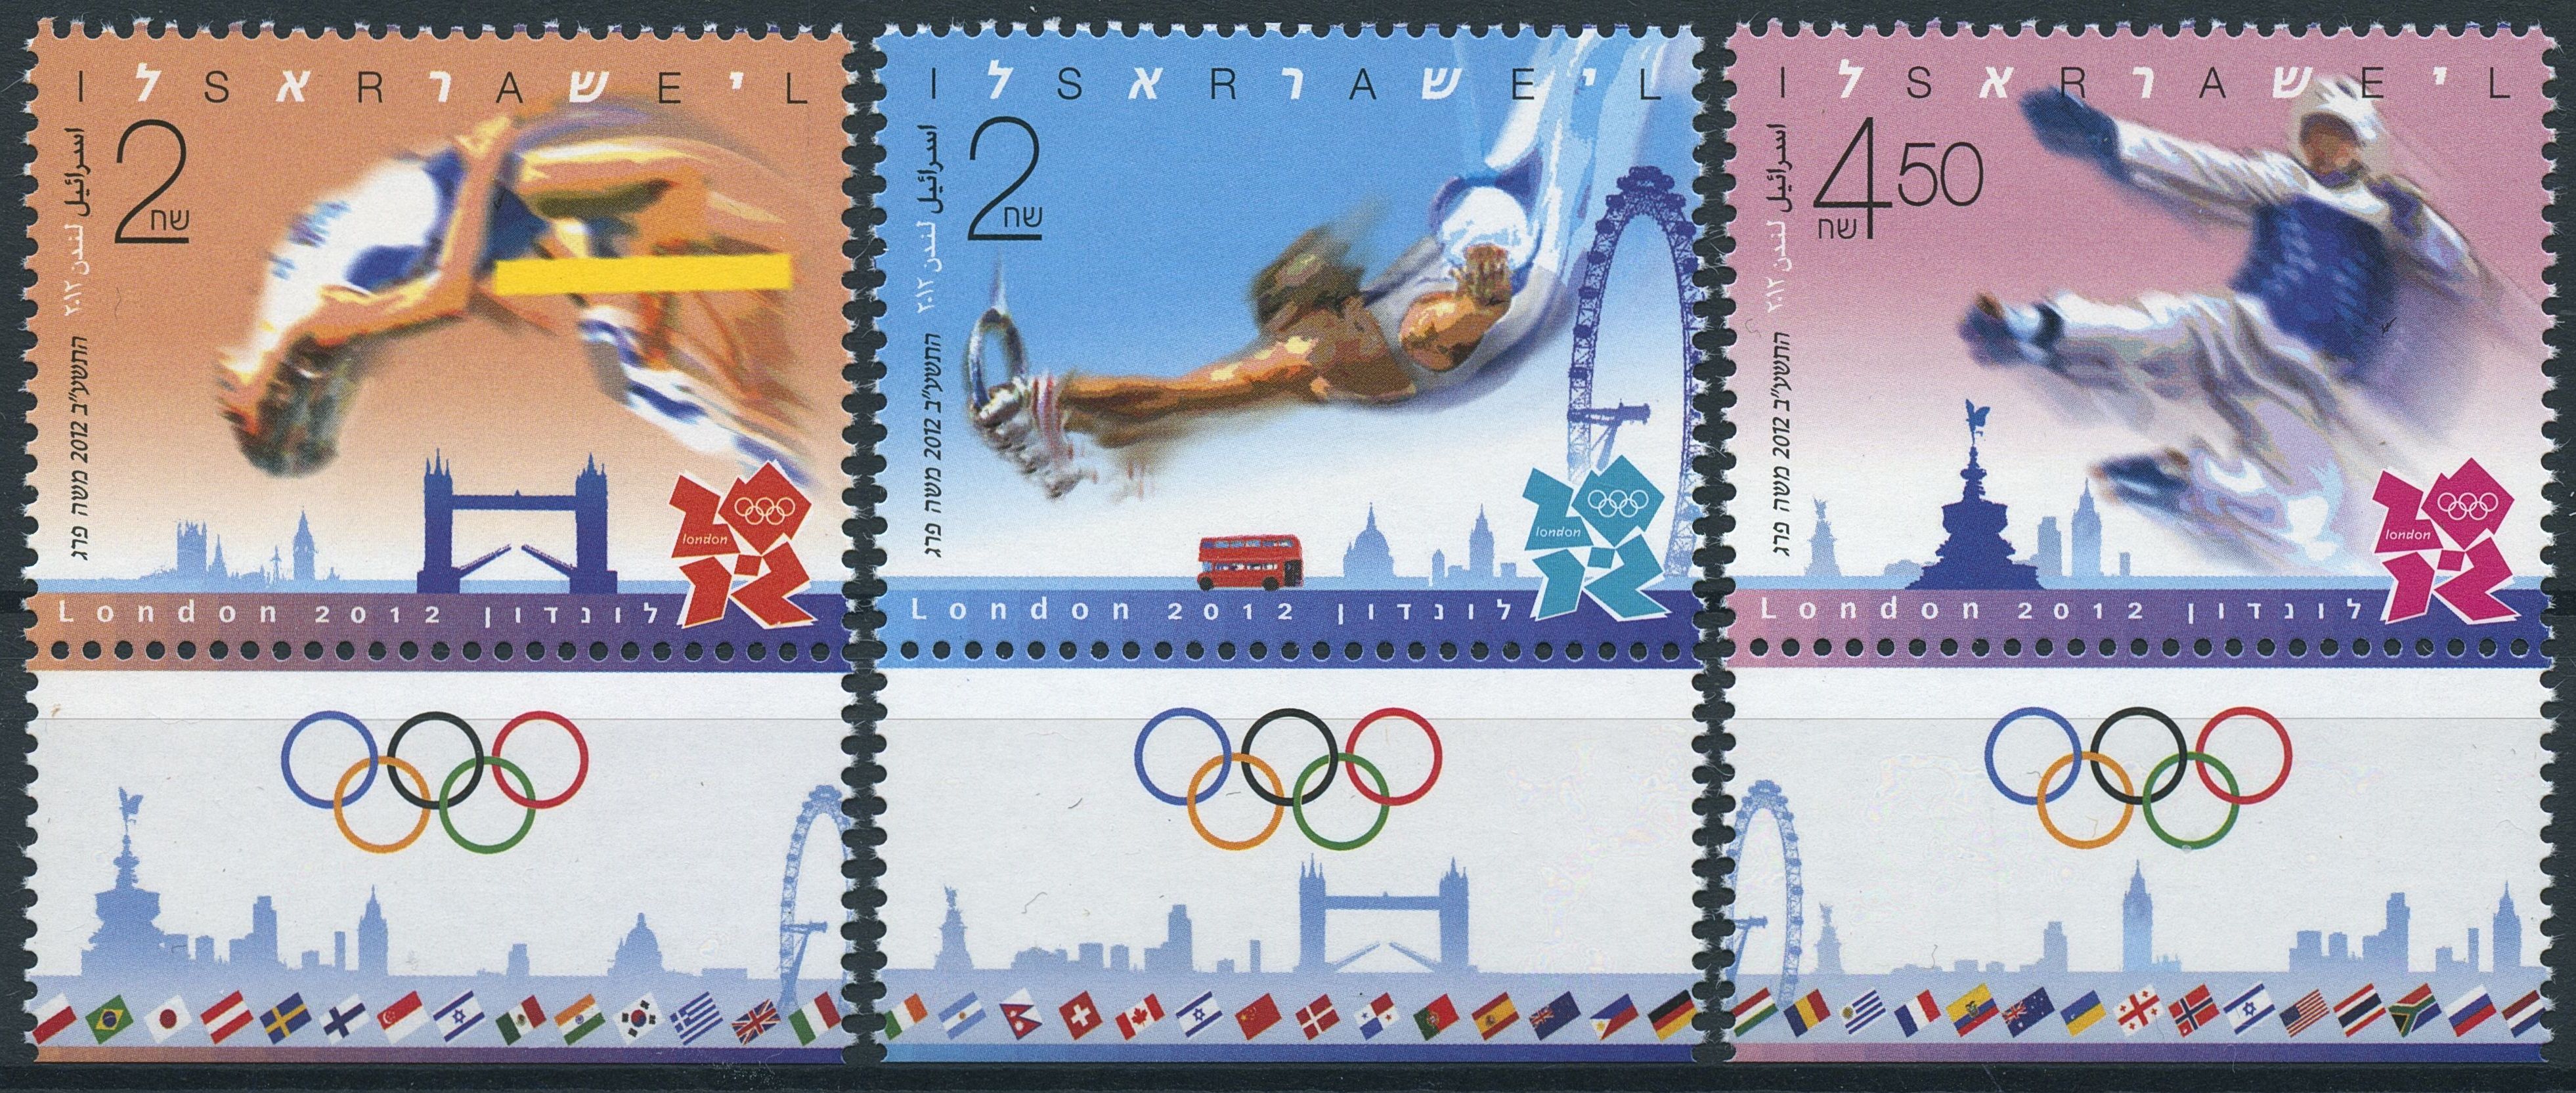 Israel 2012 MNH London Olympics 3v Set High Jump Karate Gymnastics Stamps